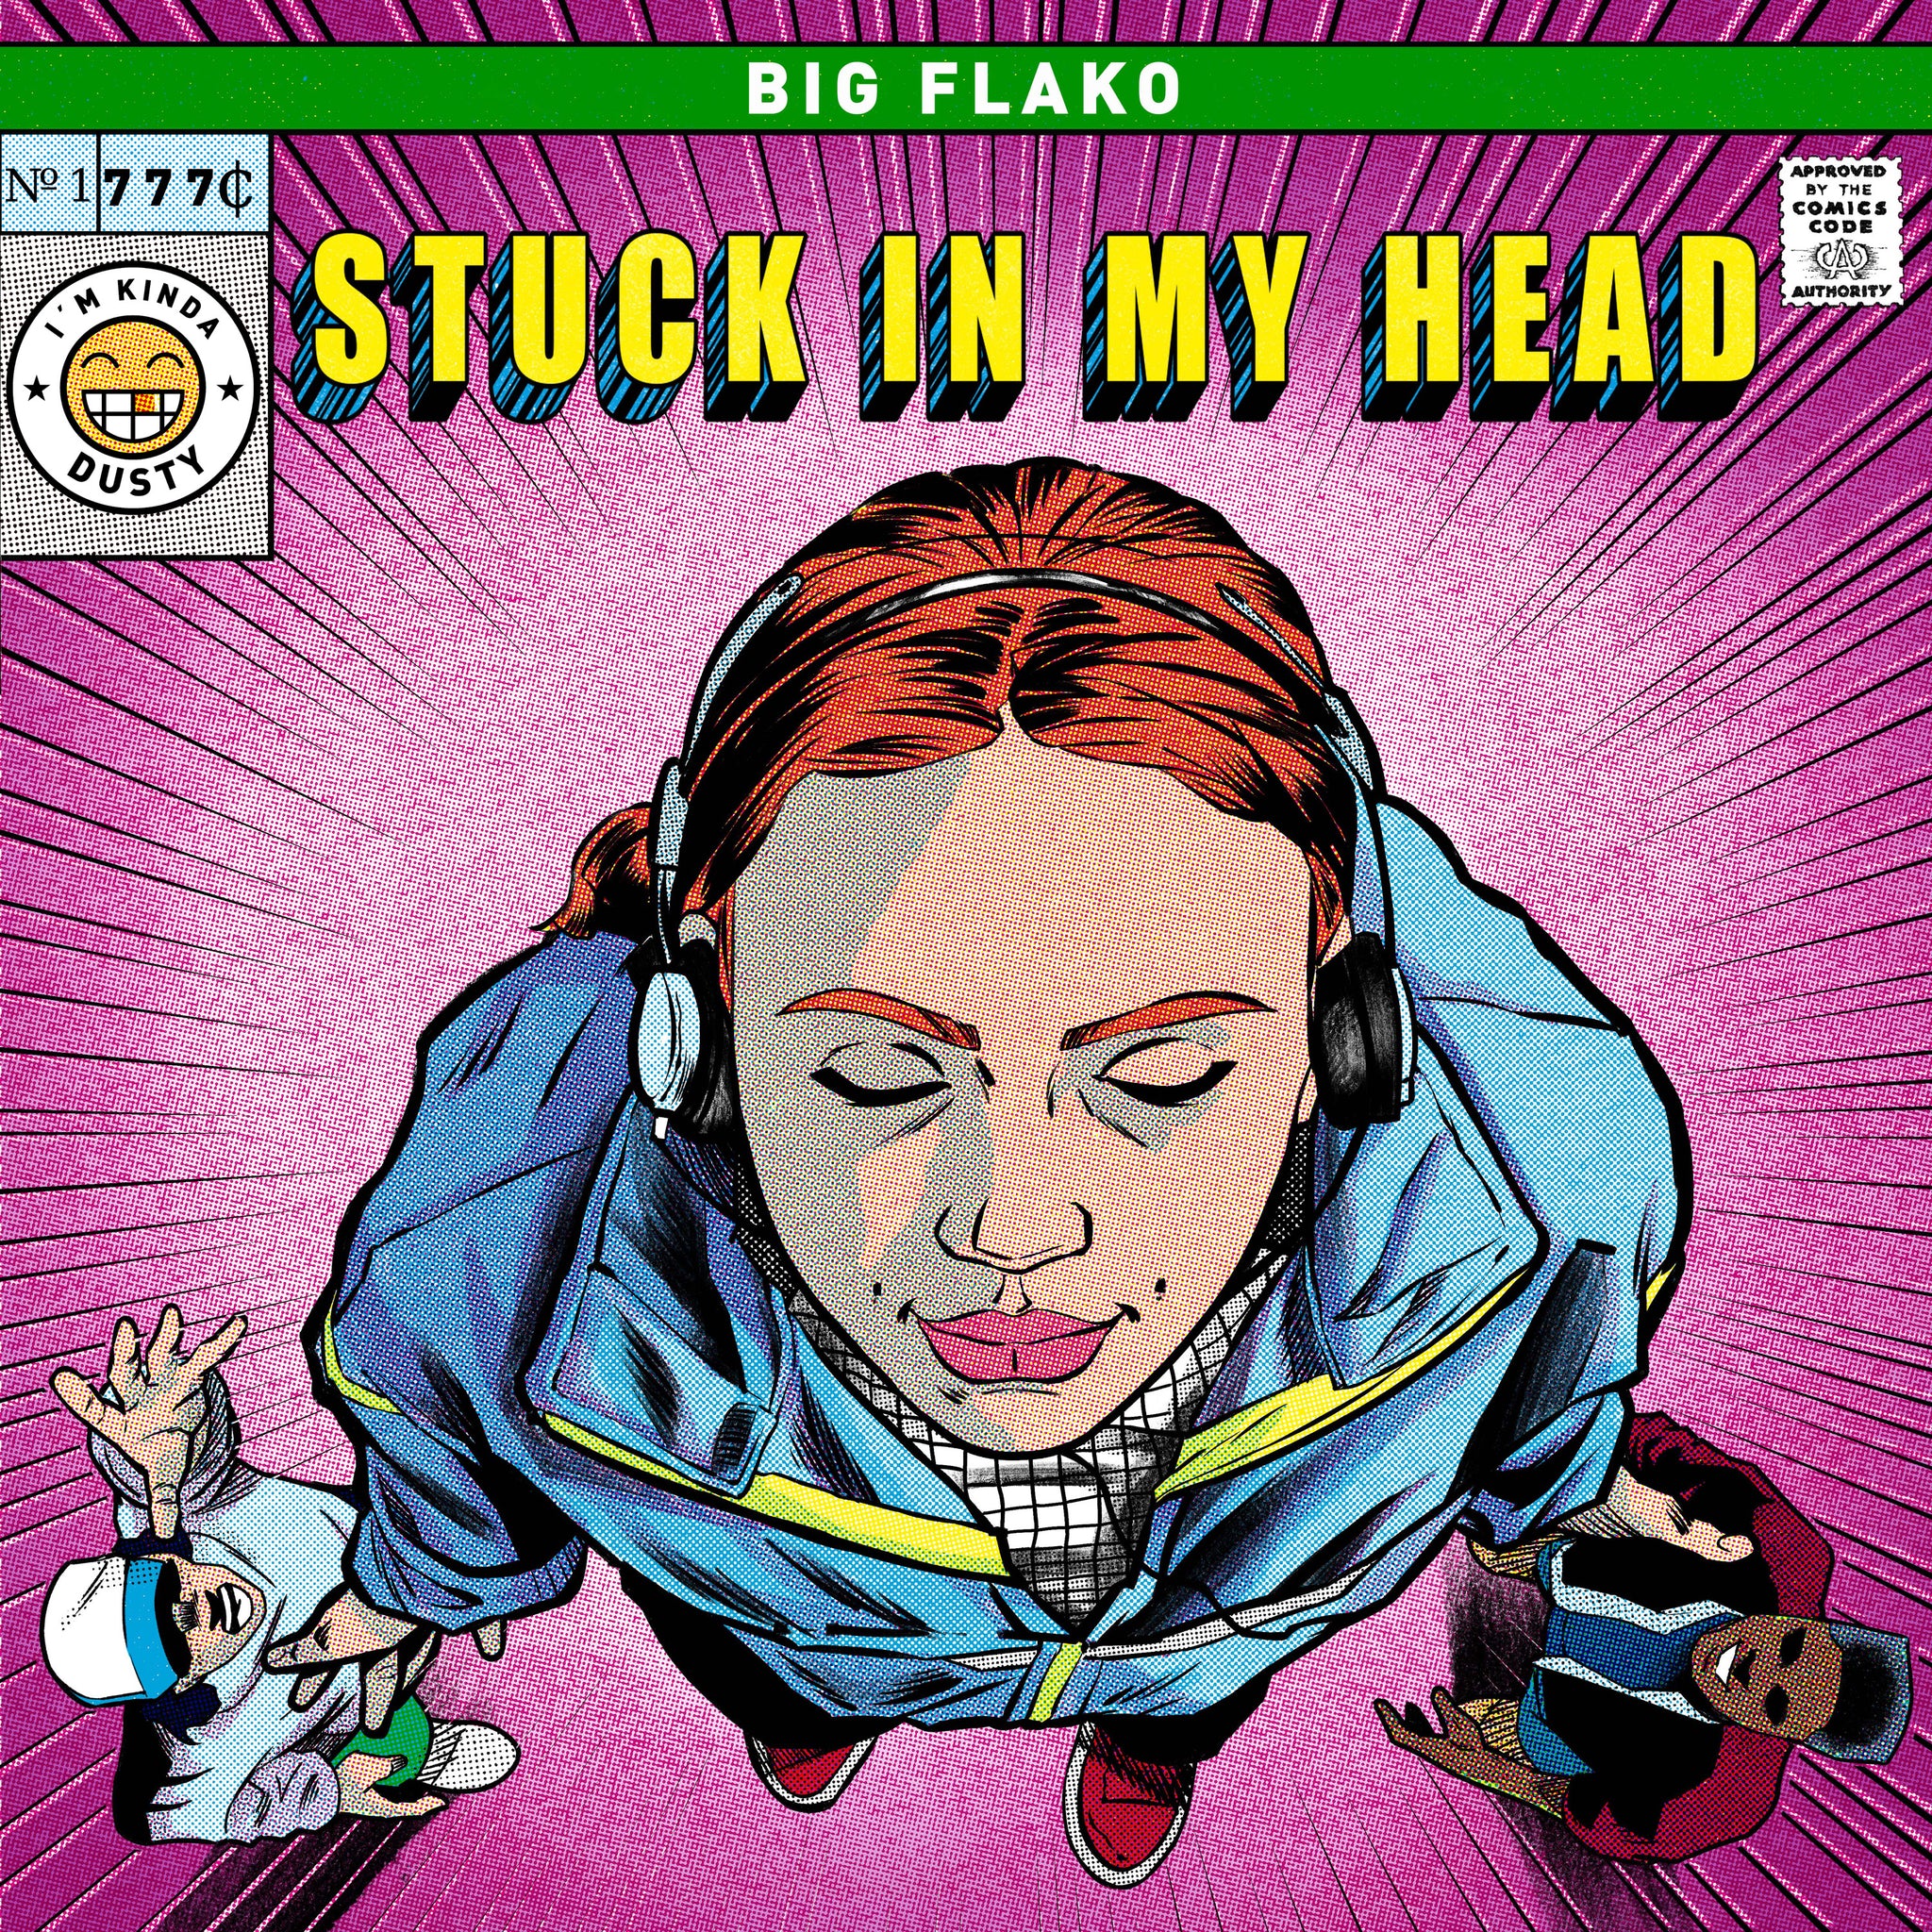 Stuck In My Head by BIG FLAKO